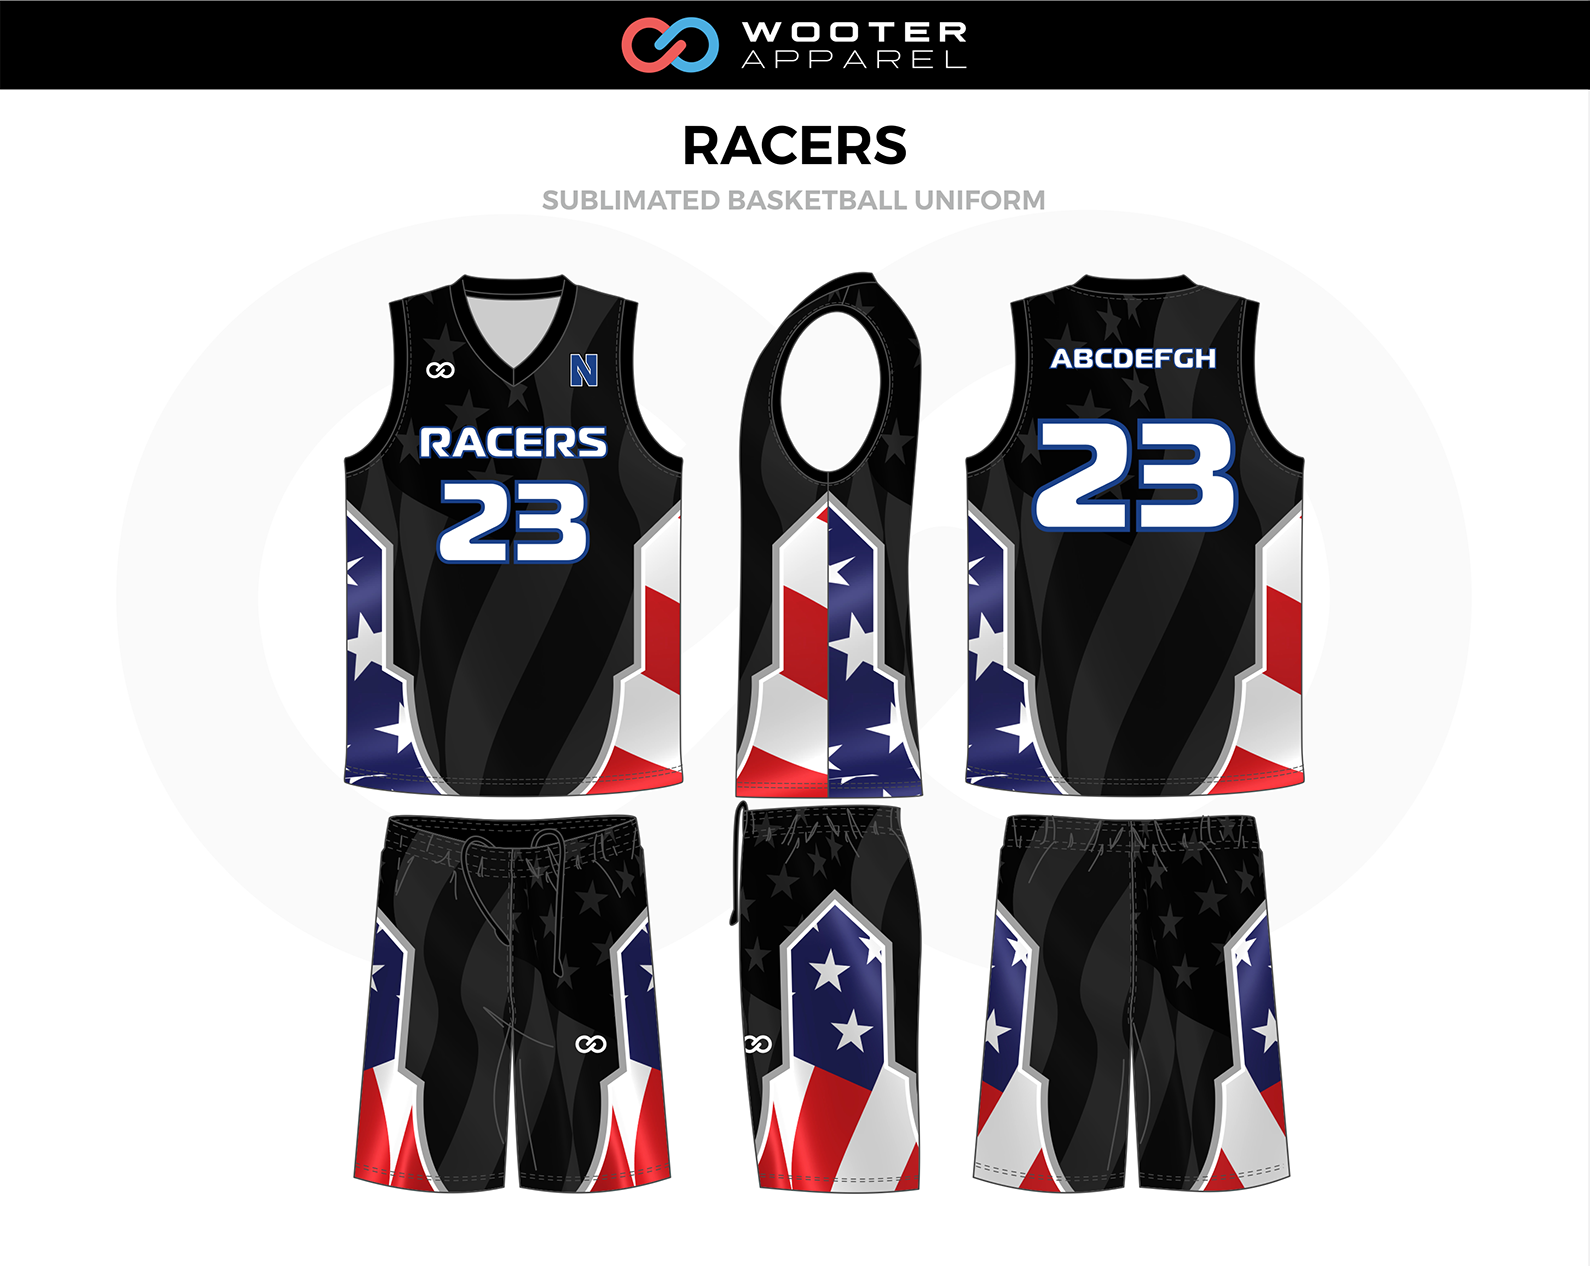 Buy Custom Basketball Uniforms Online, Wooter Apparel